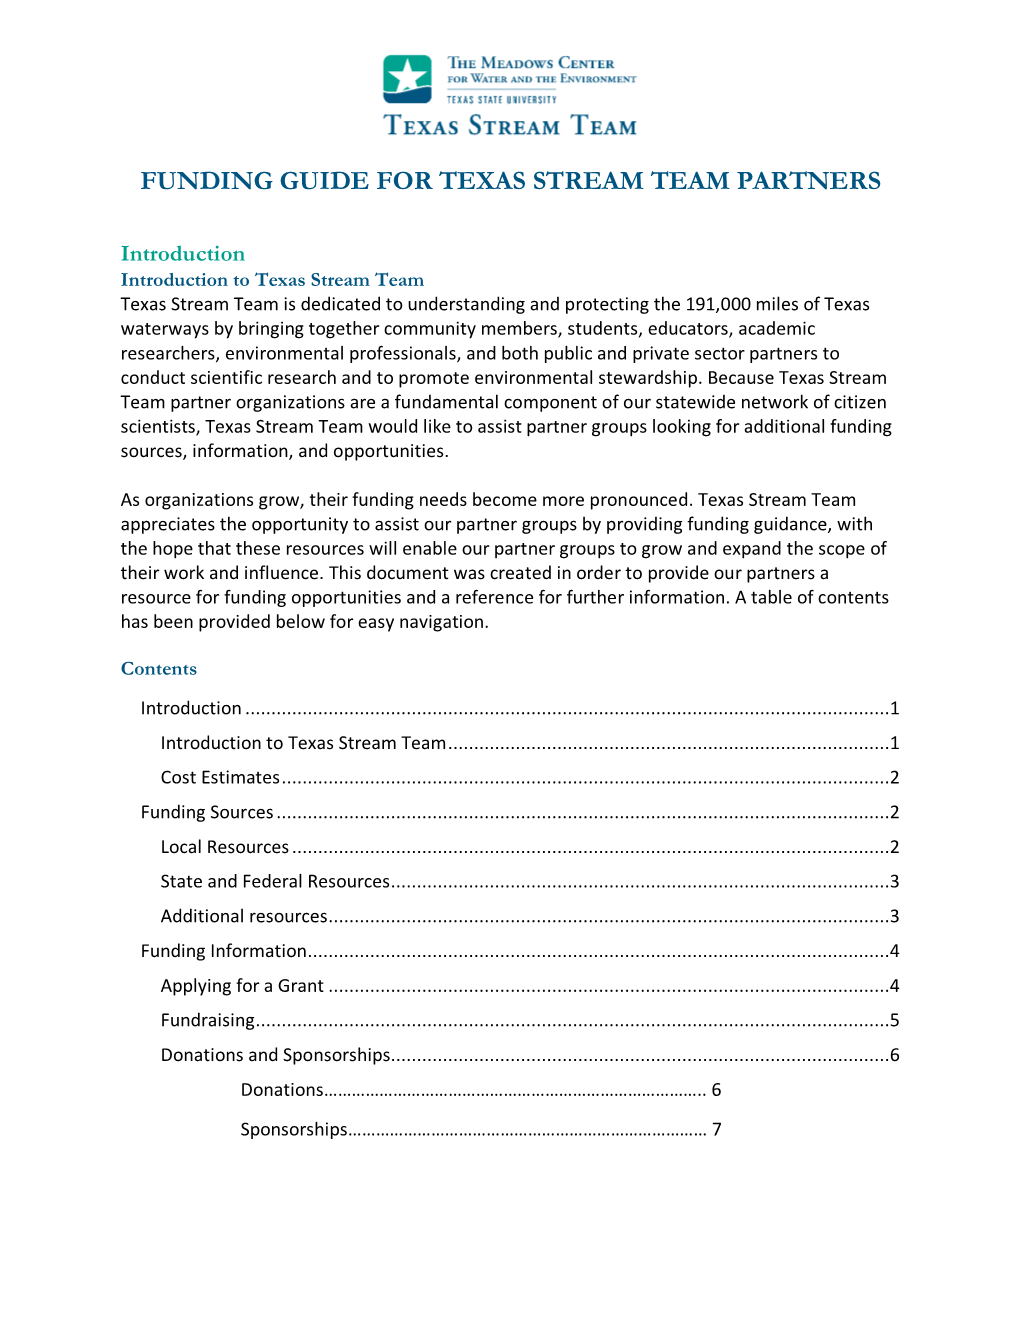 Funding Guide for Texas Stream Team Partners